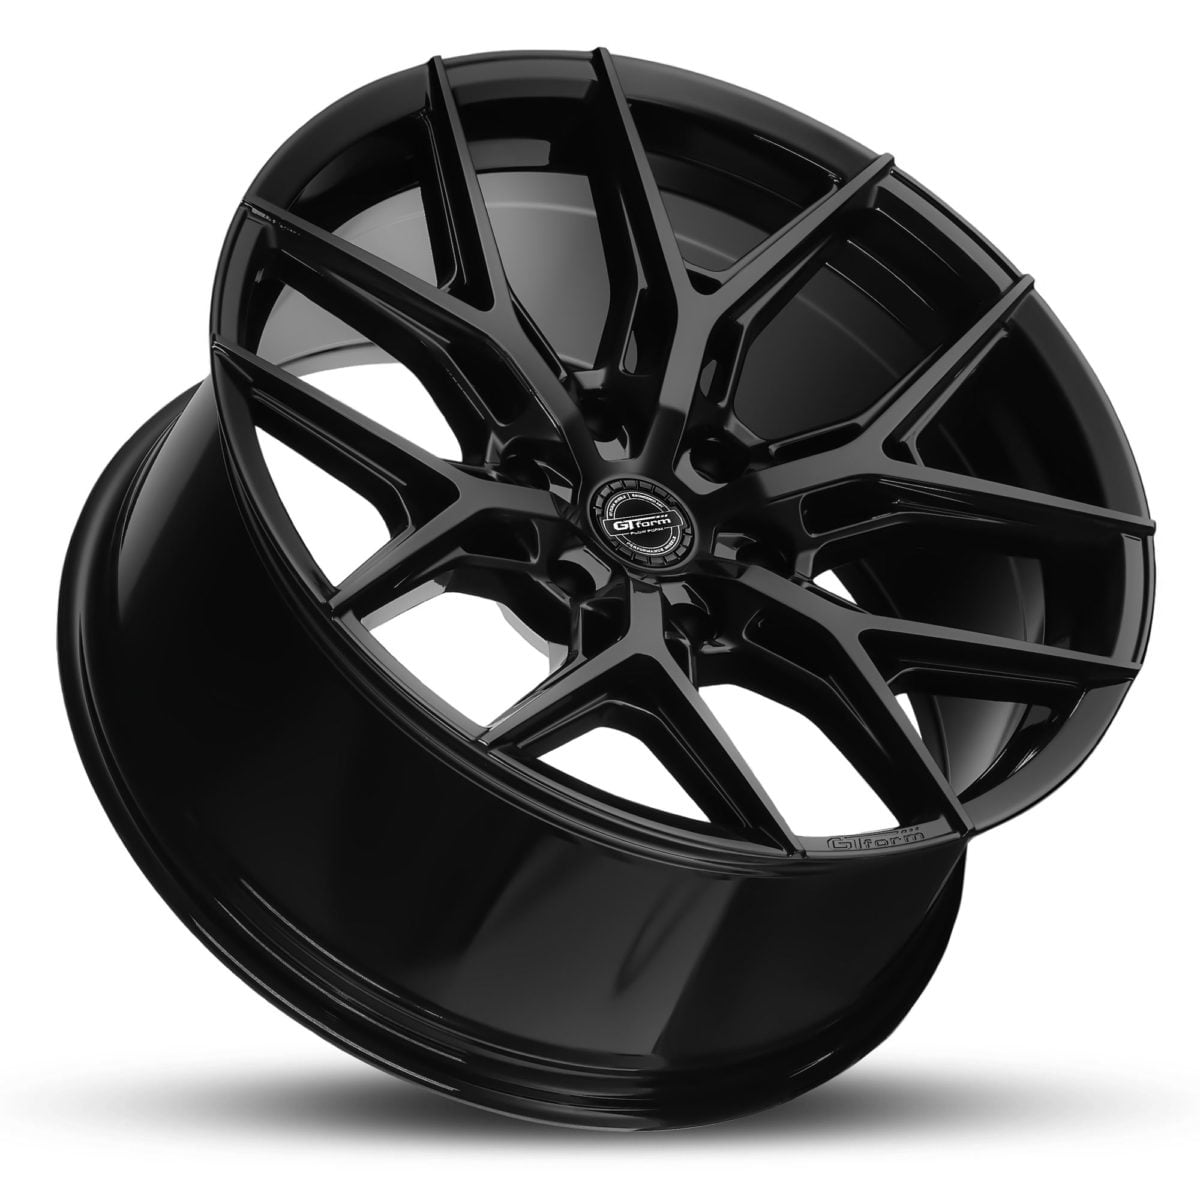 22 inch GT Form GF-S1 Satin Black Wheels 6x139.7 Rims